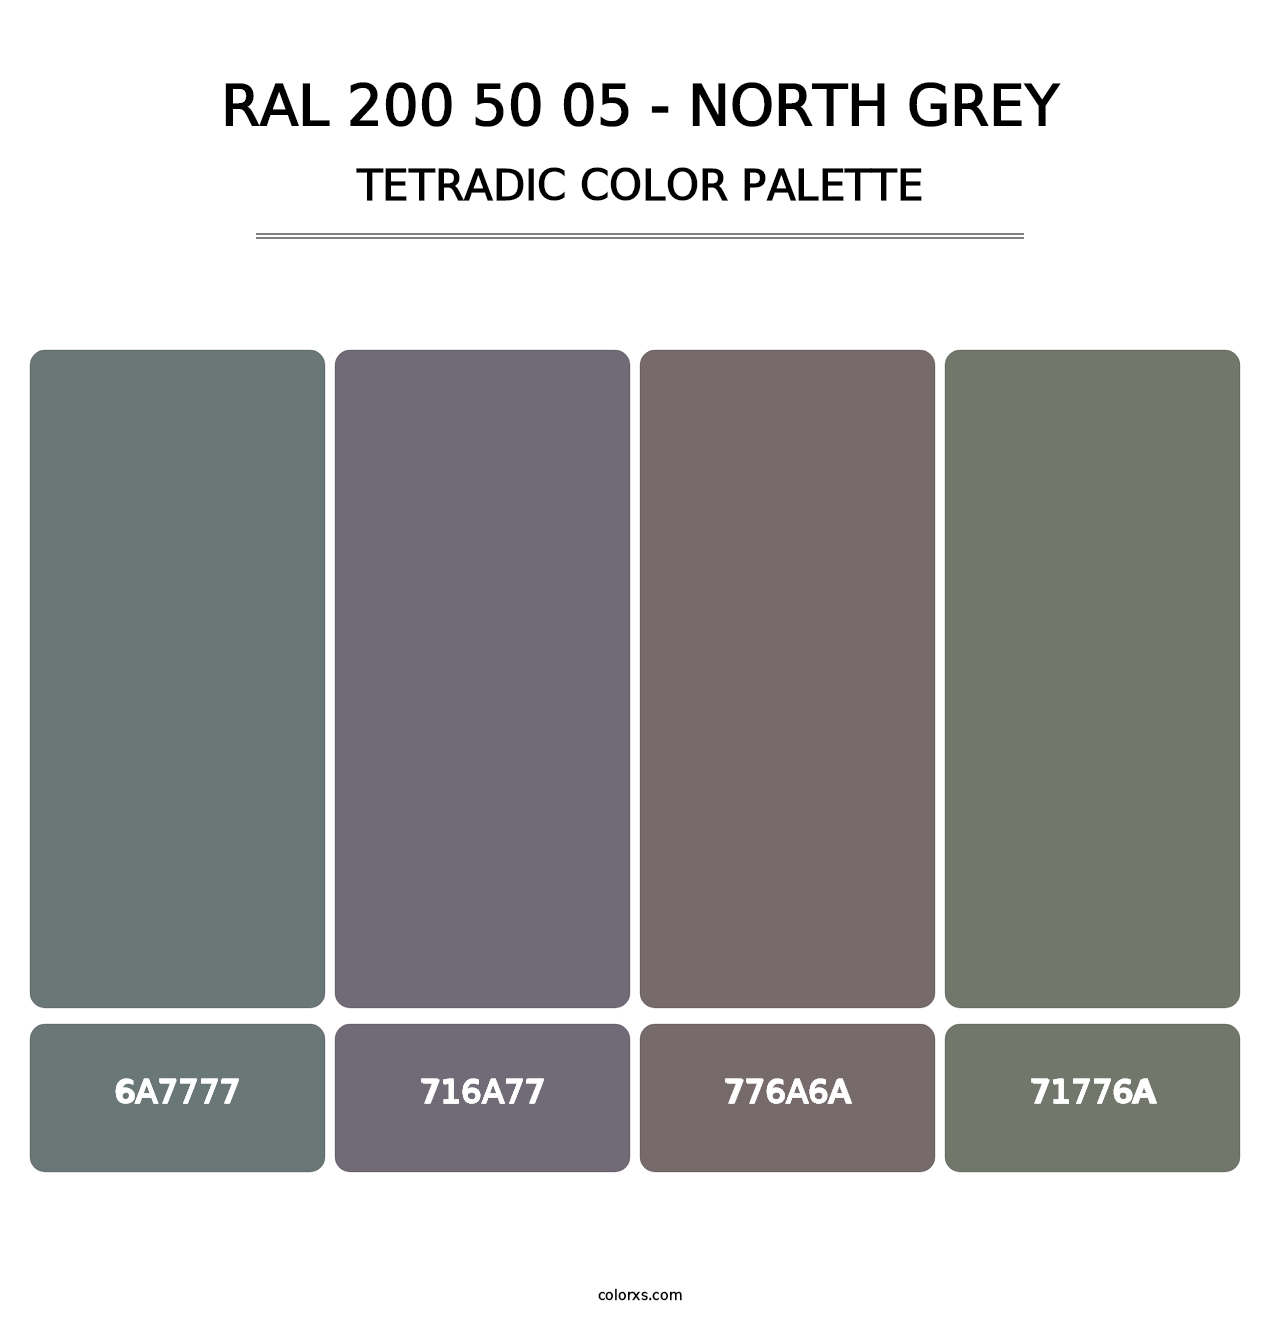 RAL 200 50 05 - North Grey - Tetradic Color Palette